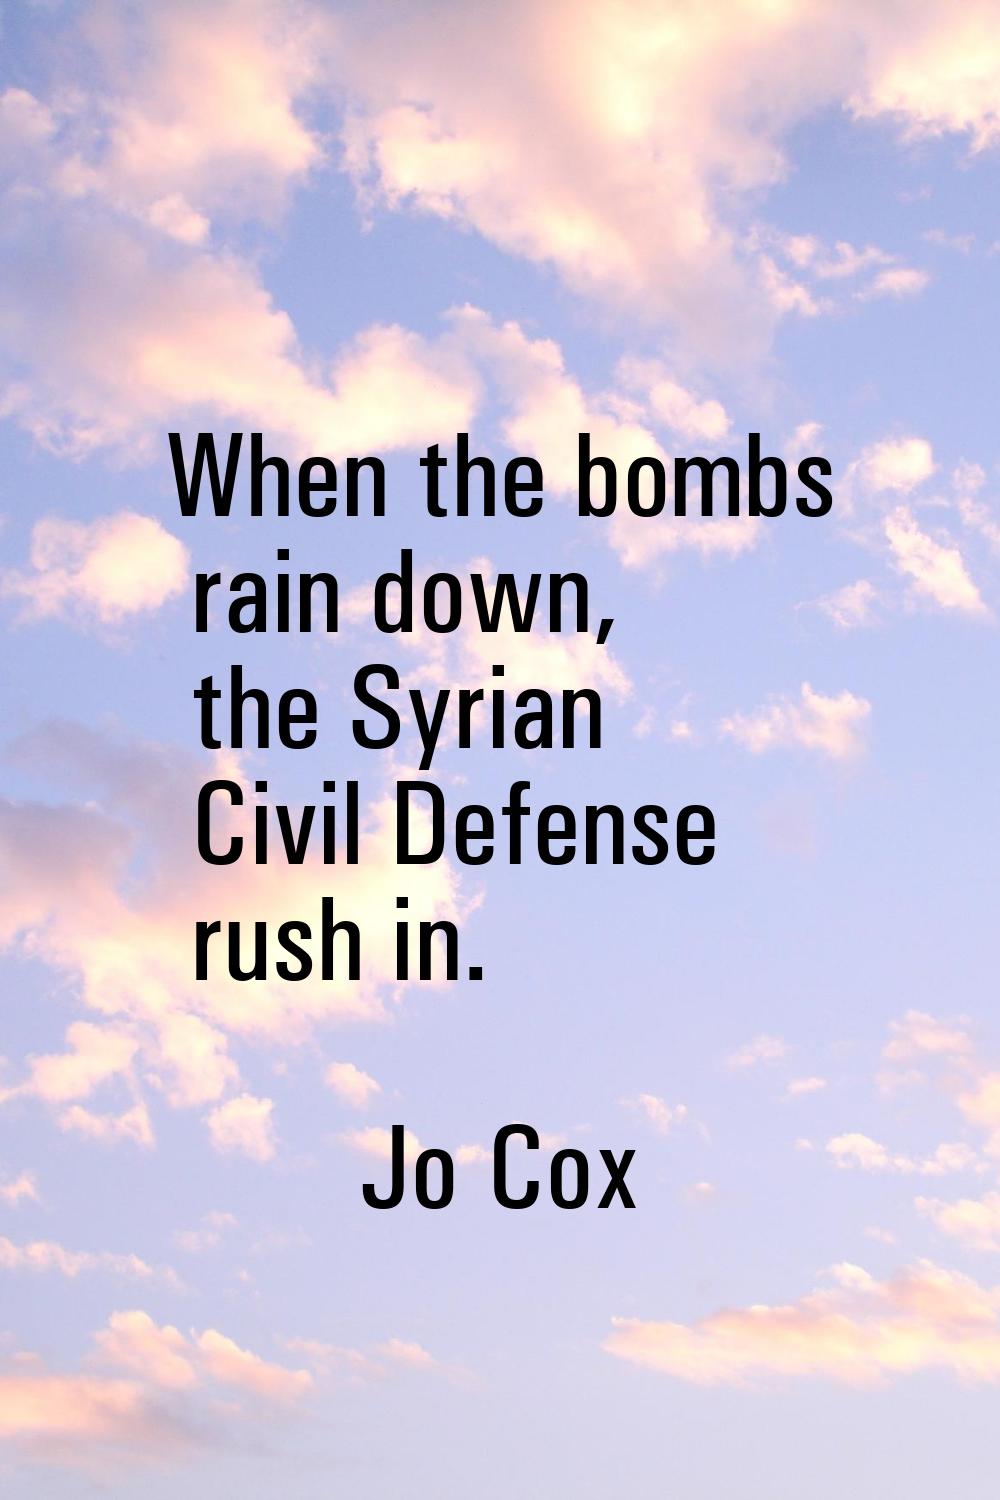 When the bombs rain down, the Syrian Civil Defense rush in.